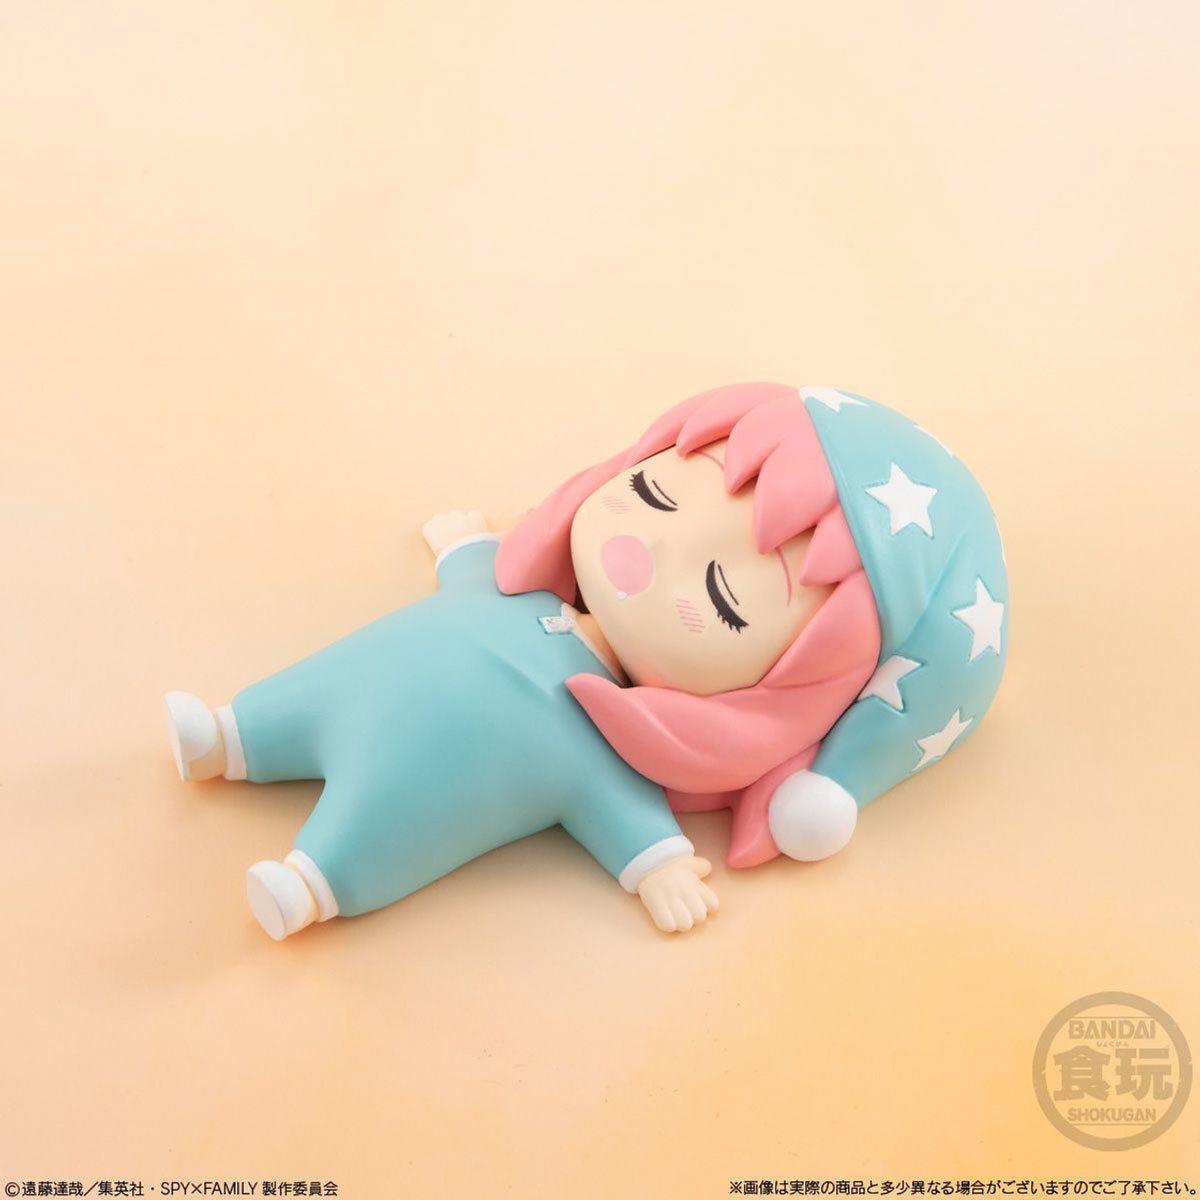 Bandai Shokugan Mini Figure Relaxing Mascot: Spy X Family - Set Completo